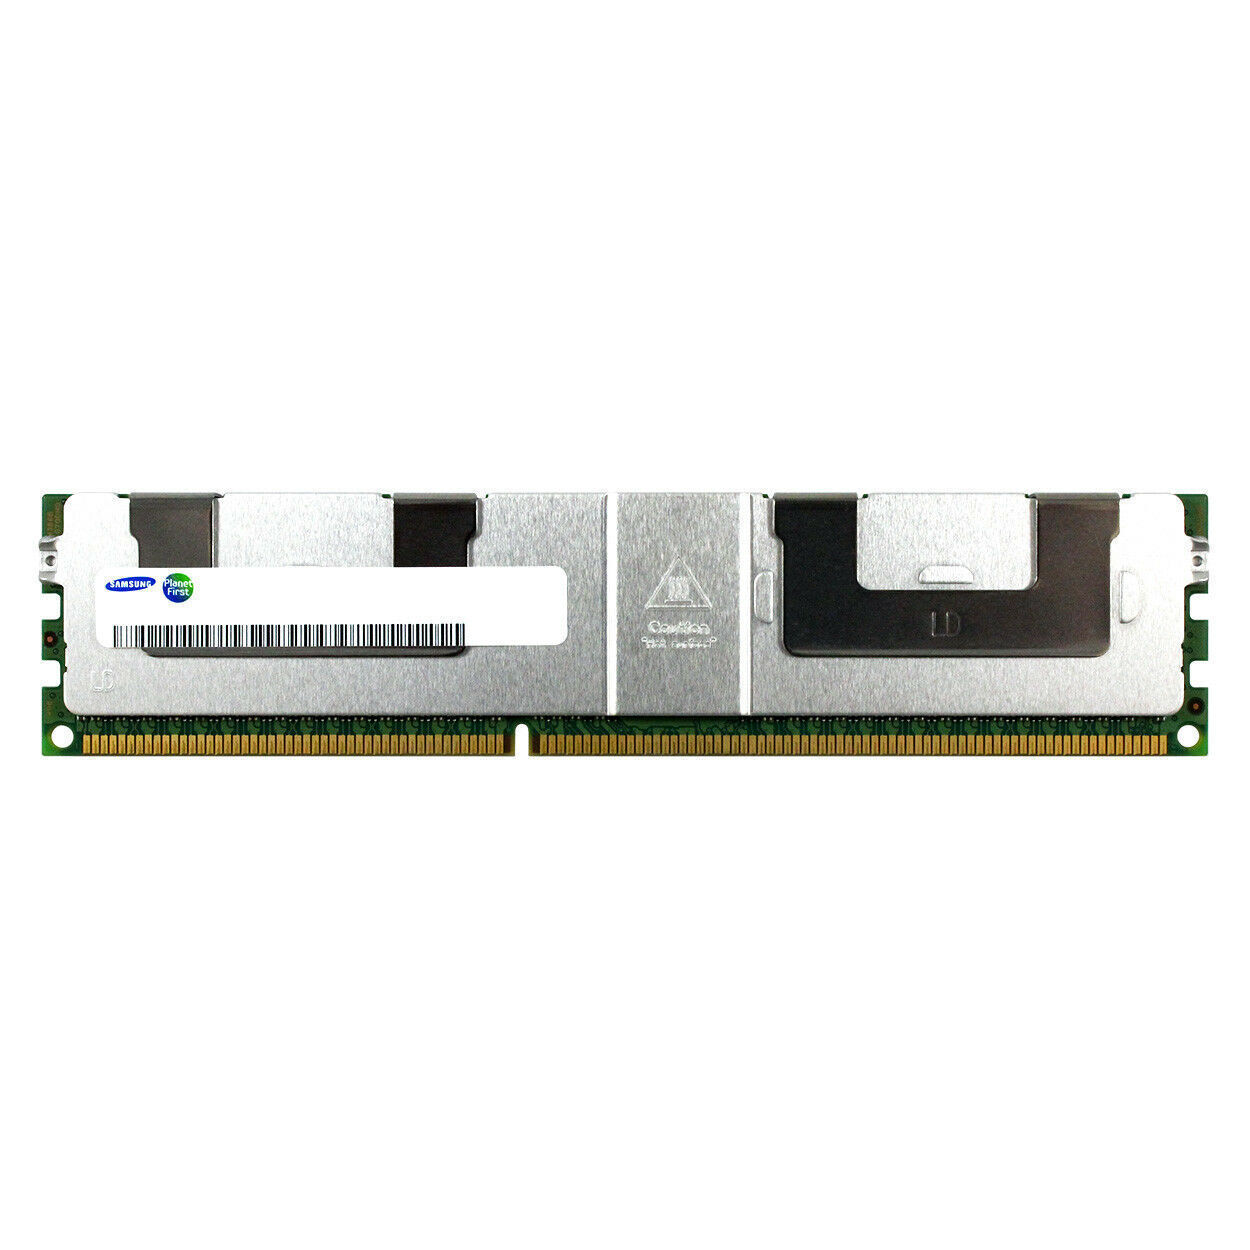 Samsung 32GB 4Rx4 PC3-14900L DDR3 1866 MHz 1.5V ECC LR LRDIMM Memory RAM 1x 32G - $42.56